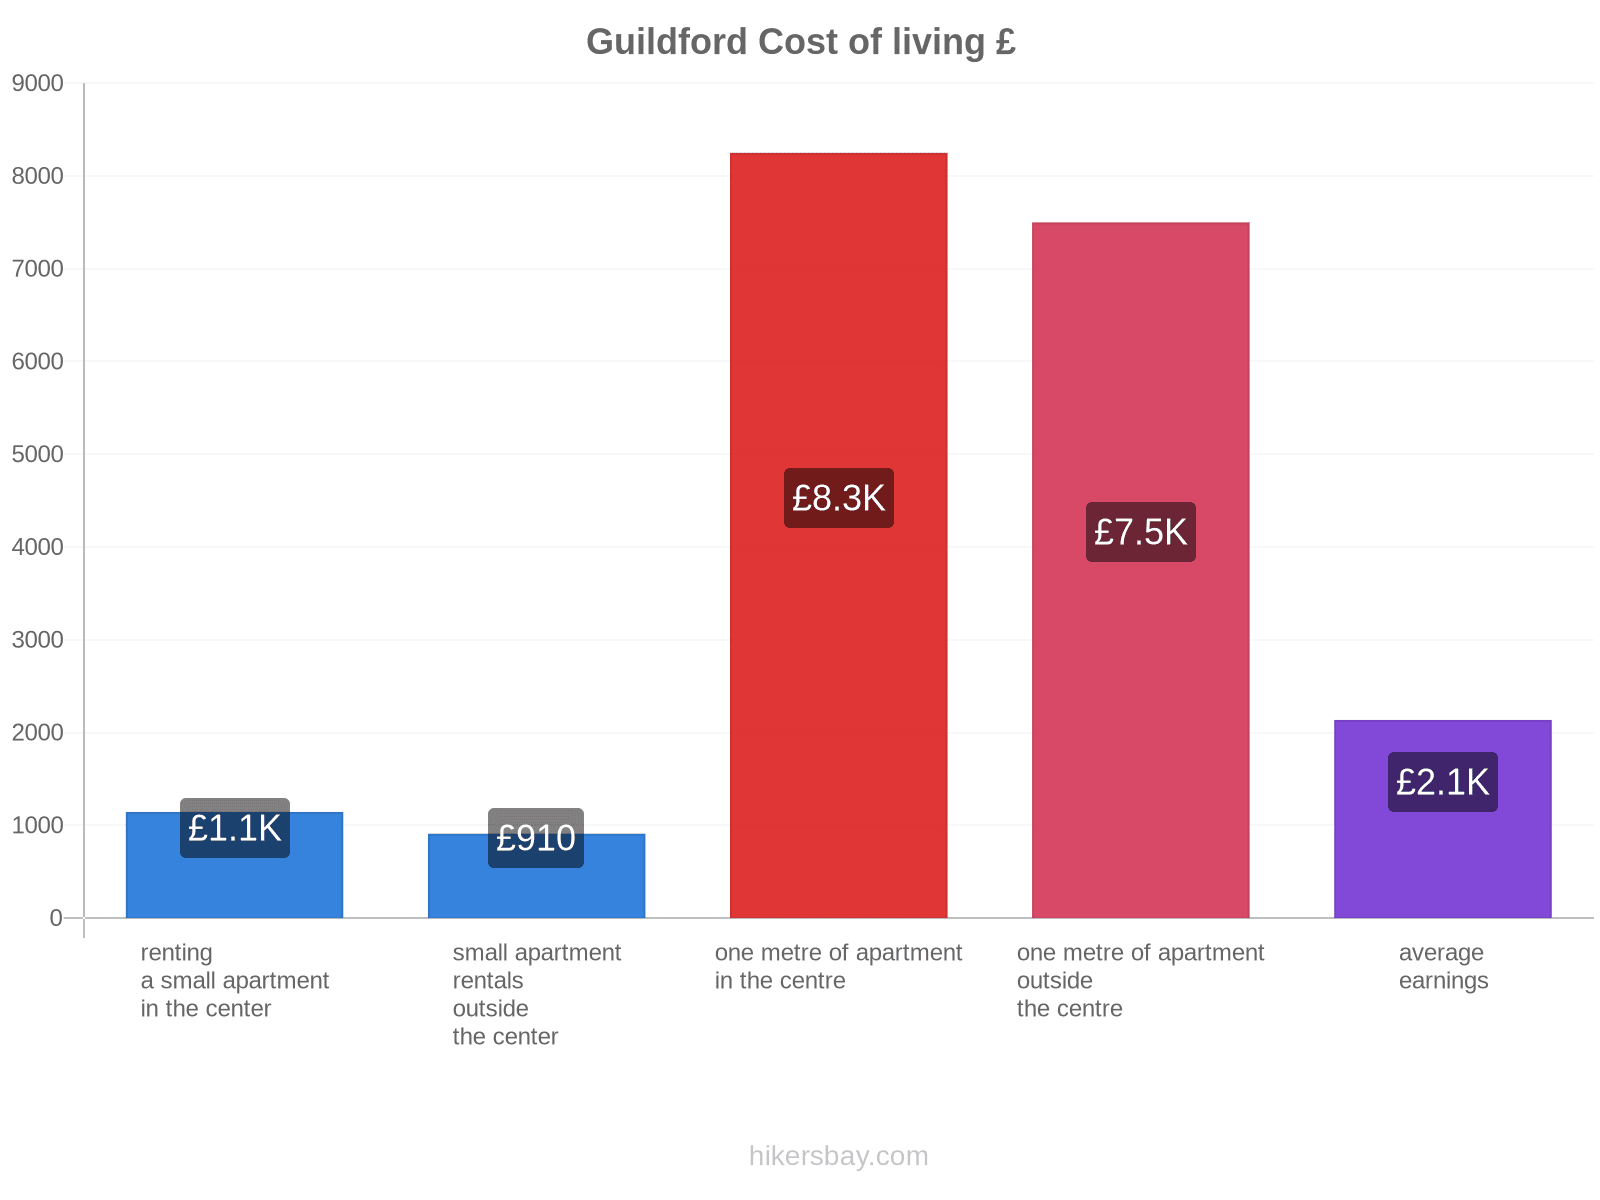 Guildford cost of living hikersbay.com